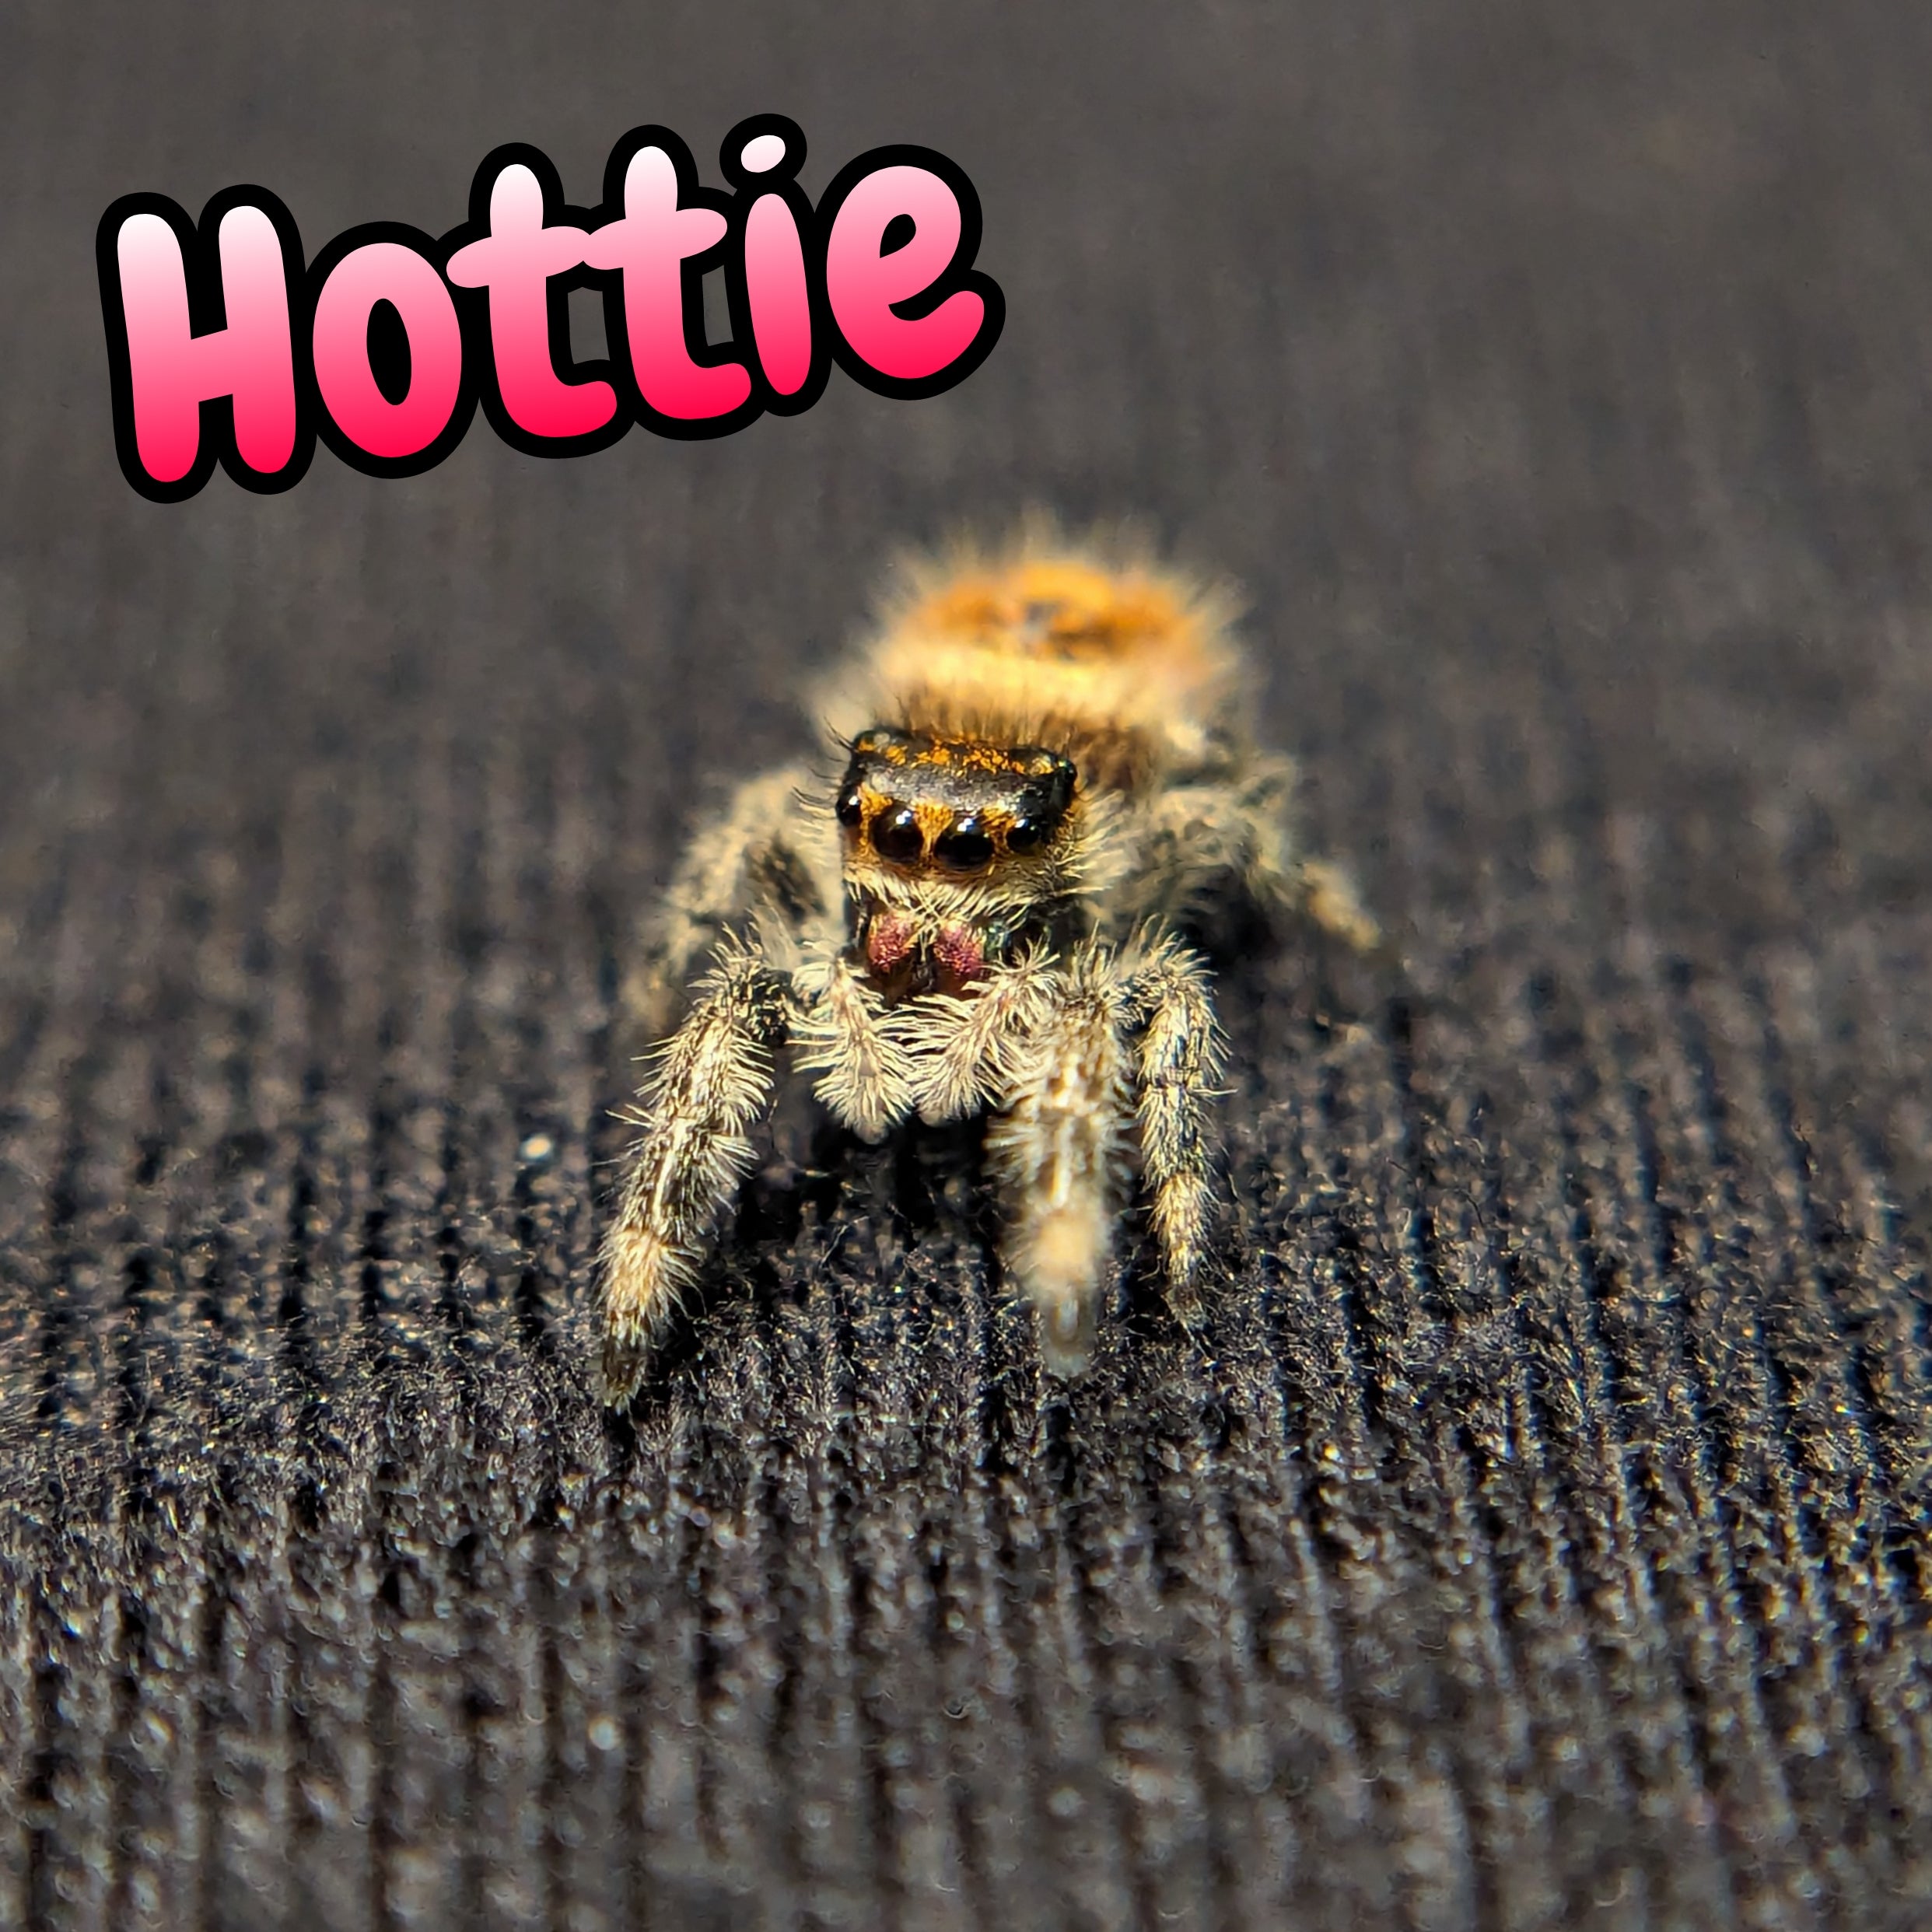 Regal Jumping Spider "Hotty"